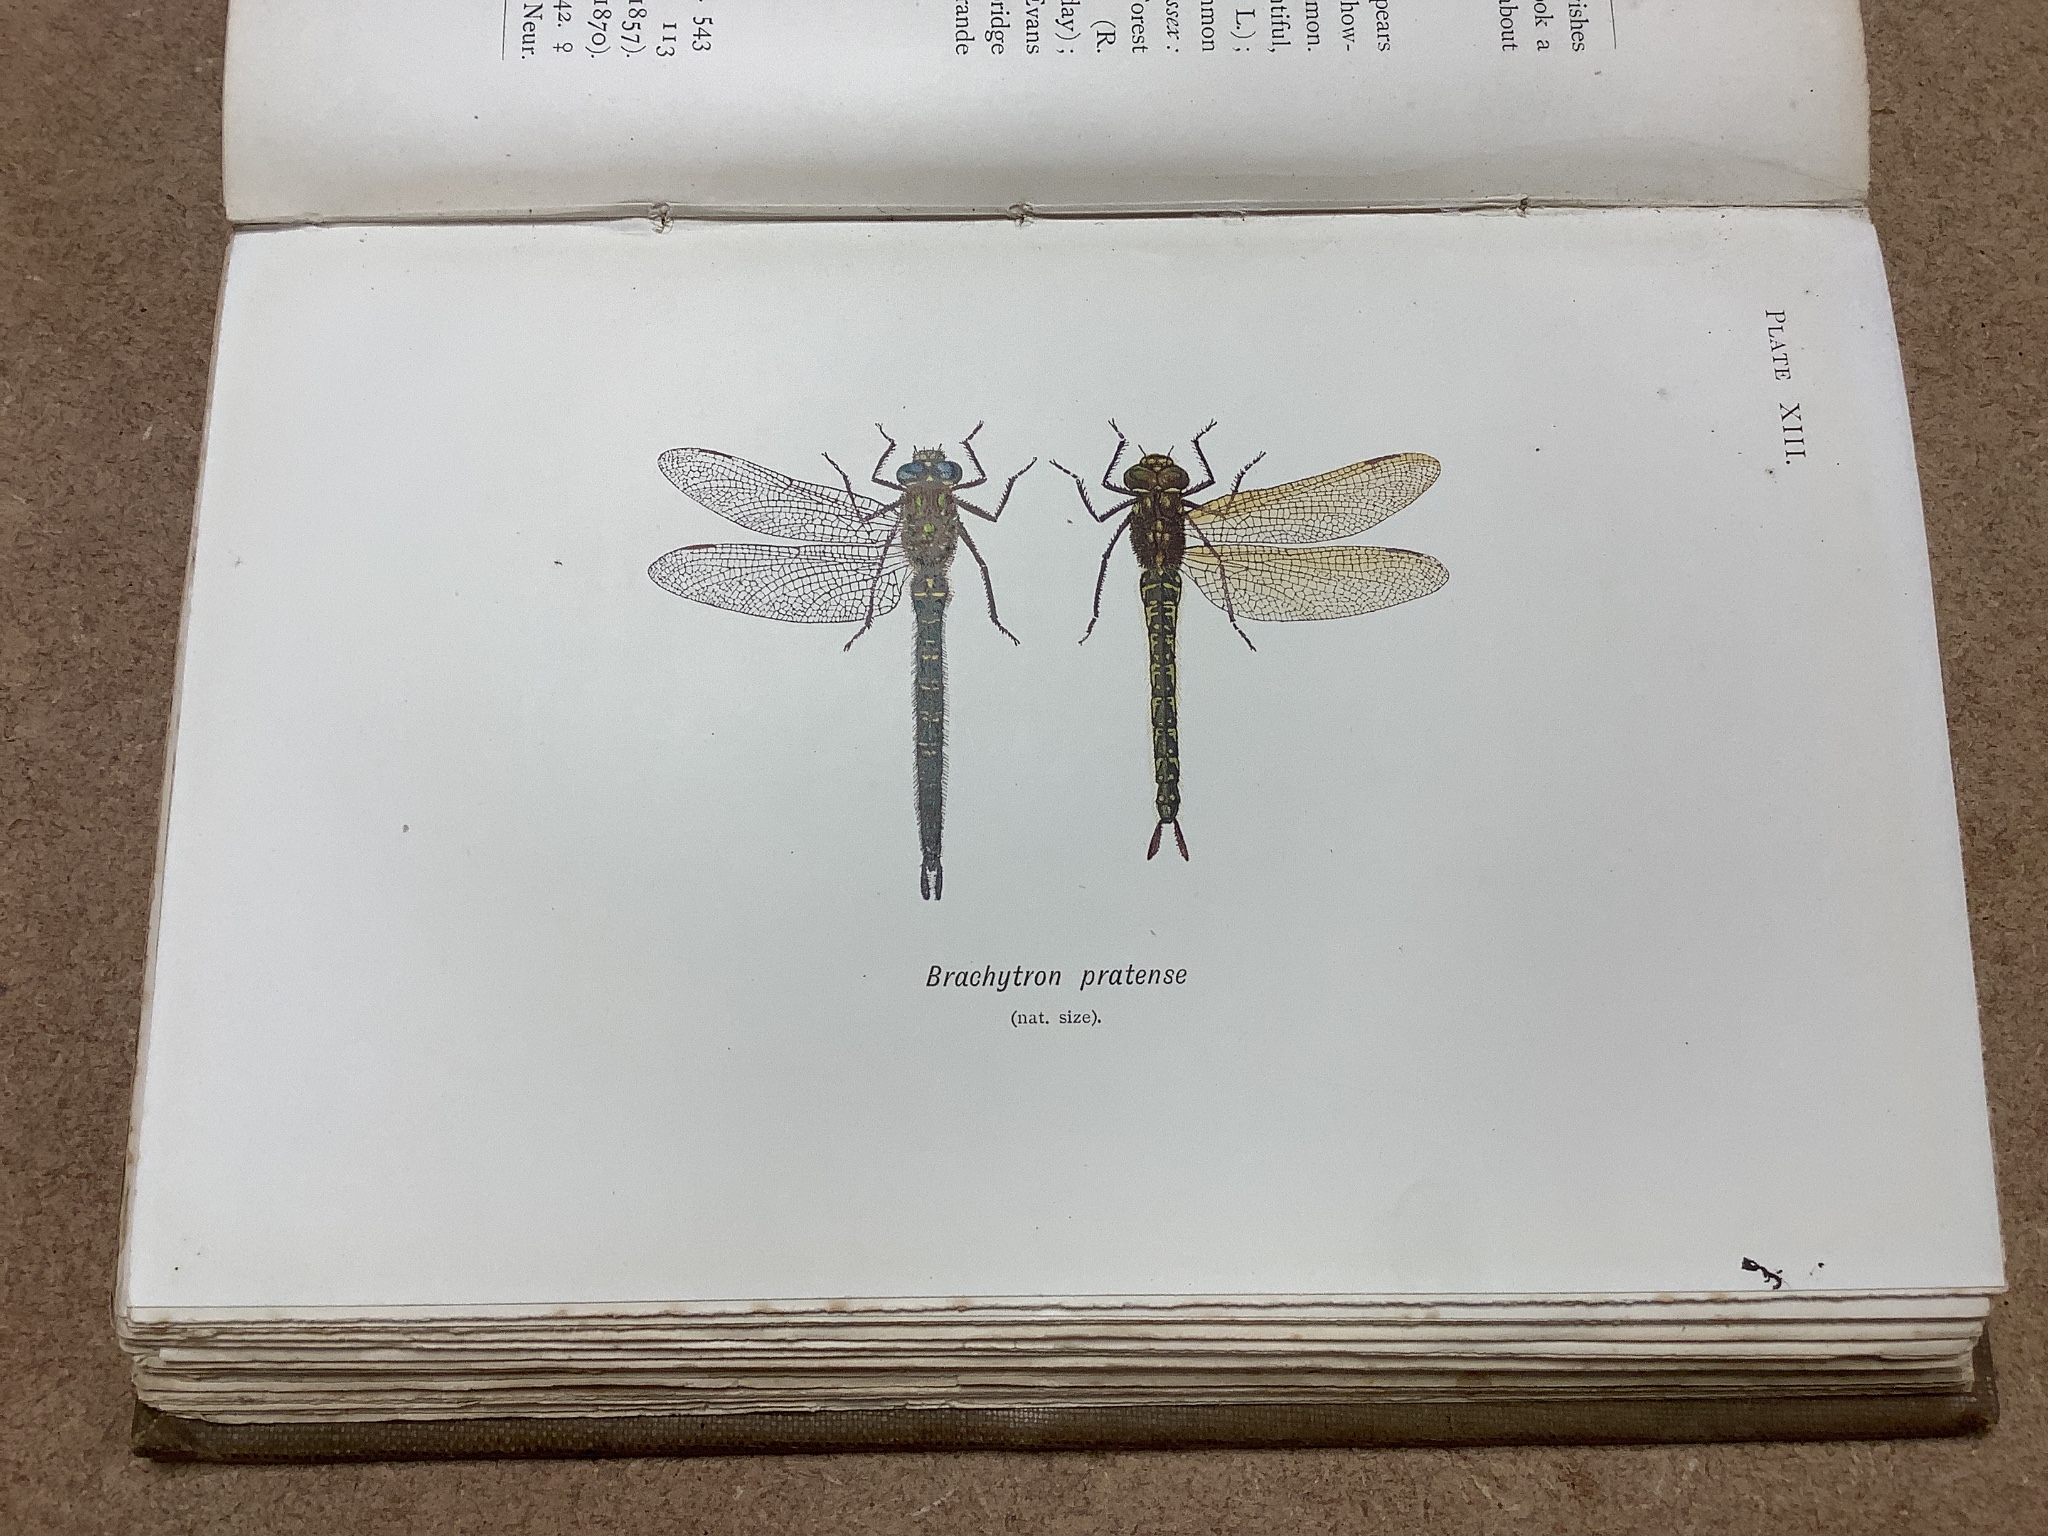 Lucas, William, John - British Dragonflies: (Odonata), 8vo, cloth, L. Upcott Gill, London, 1900 and Tillyard, Robert, John - The Biology of Dragonflies, 8vo, cloth, scuffed, spines bumped, Cambridge University Press, 191